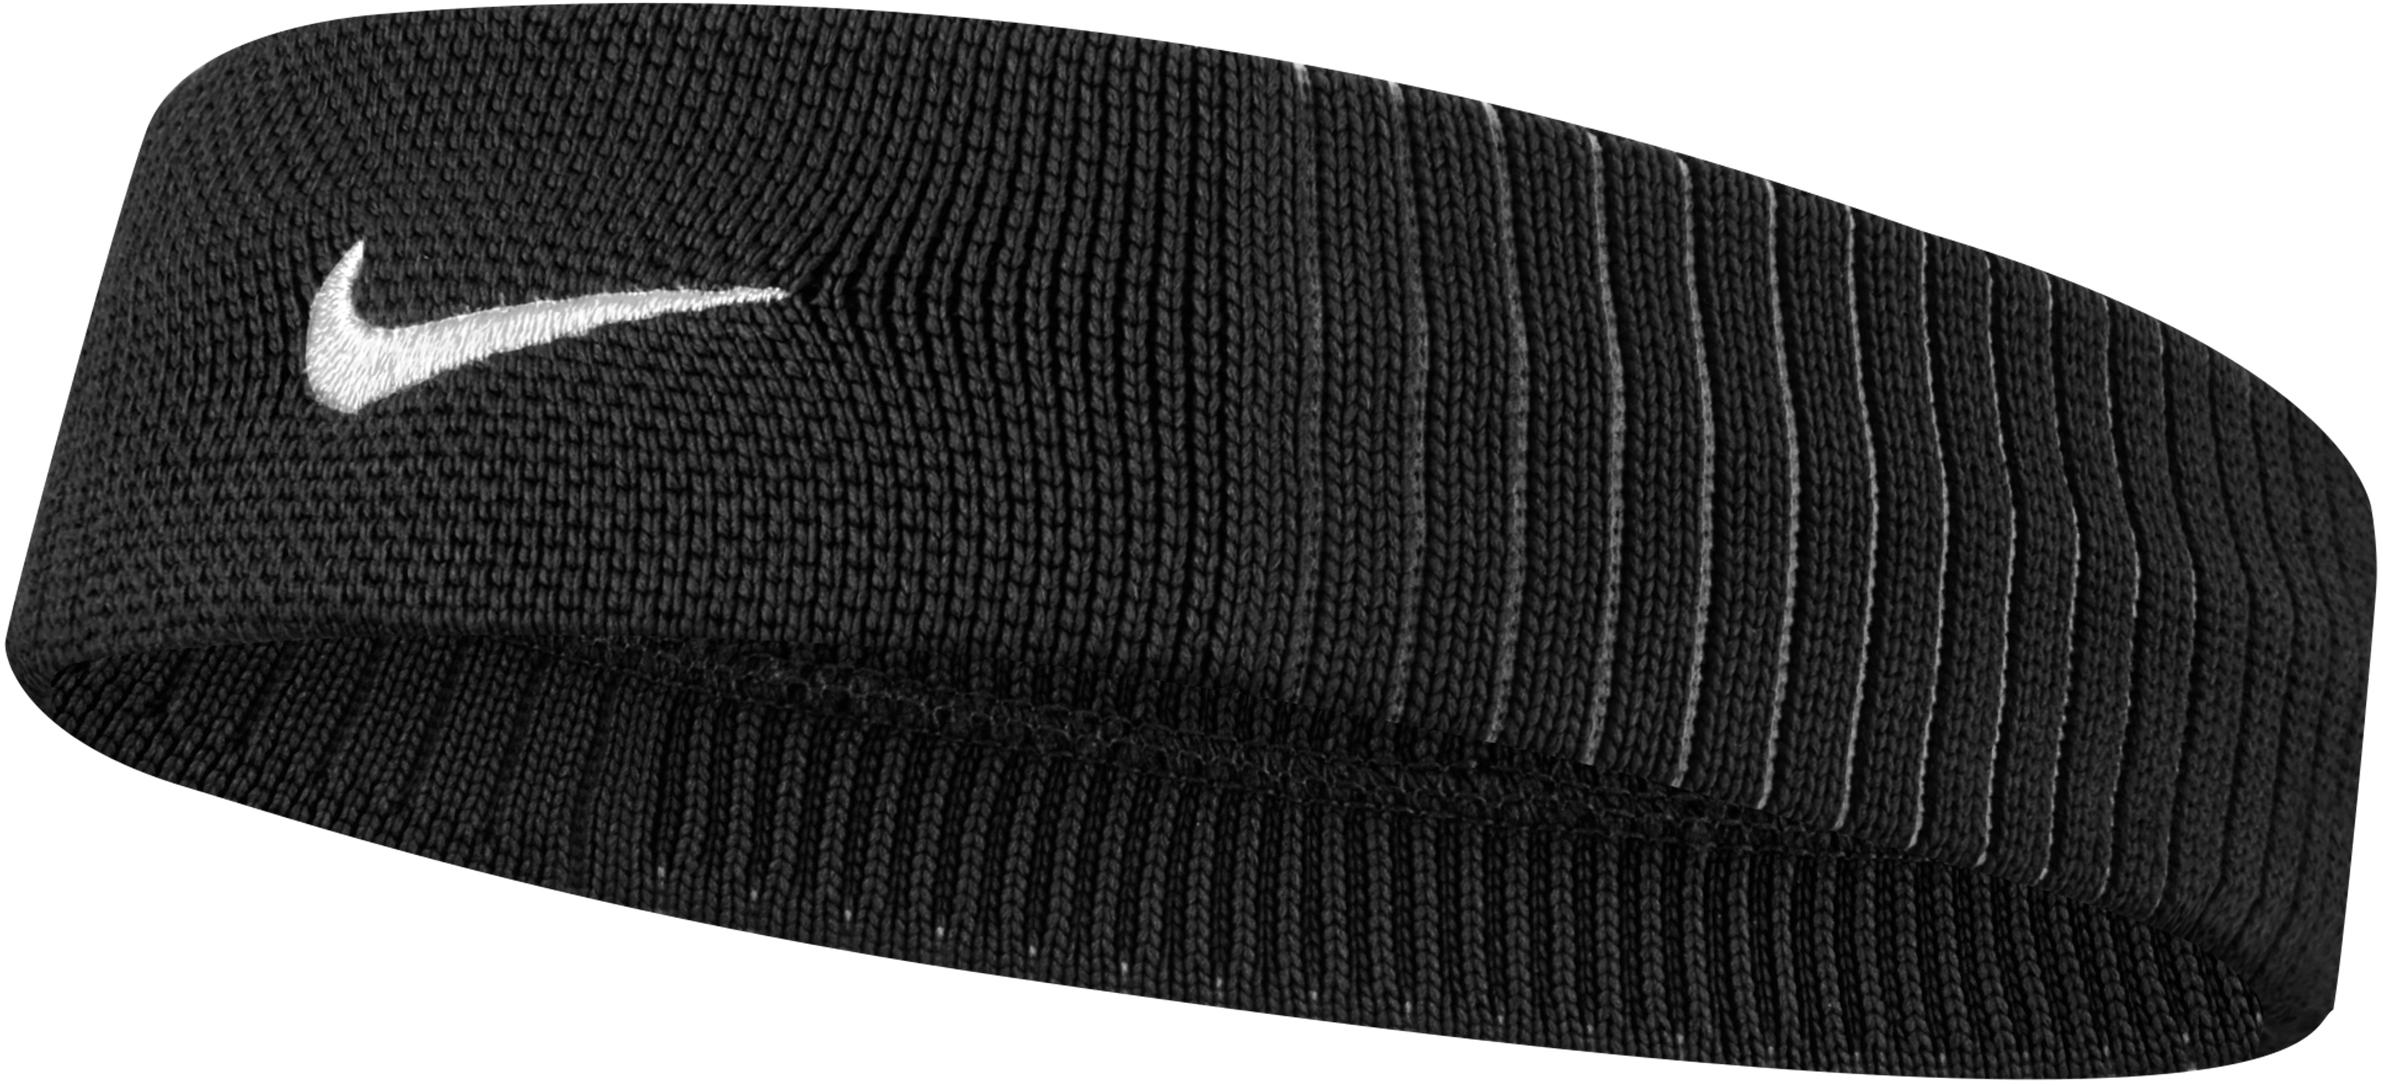 Nike Dri-fit Reveal Headband - Black/cool Grey/white